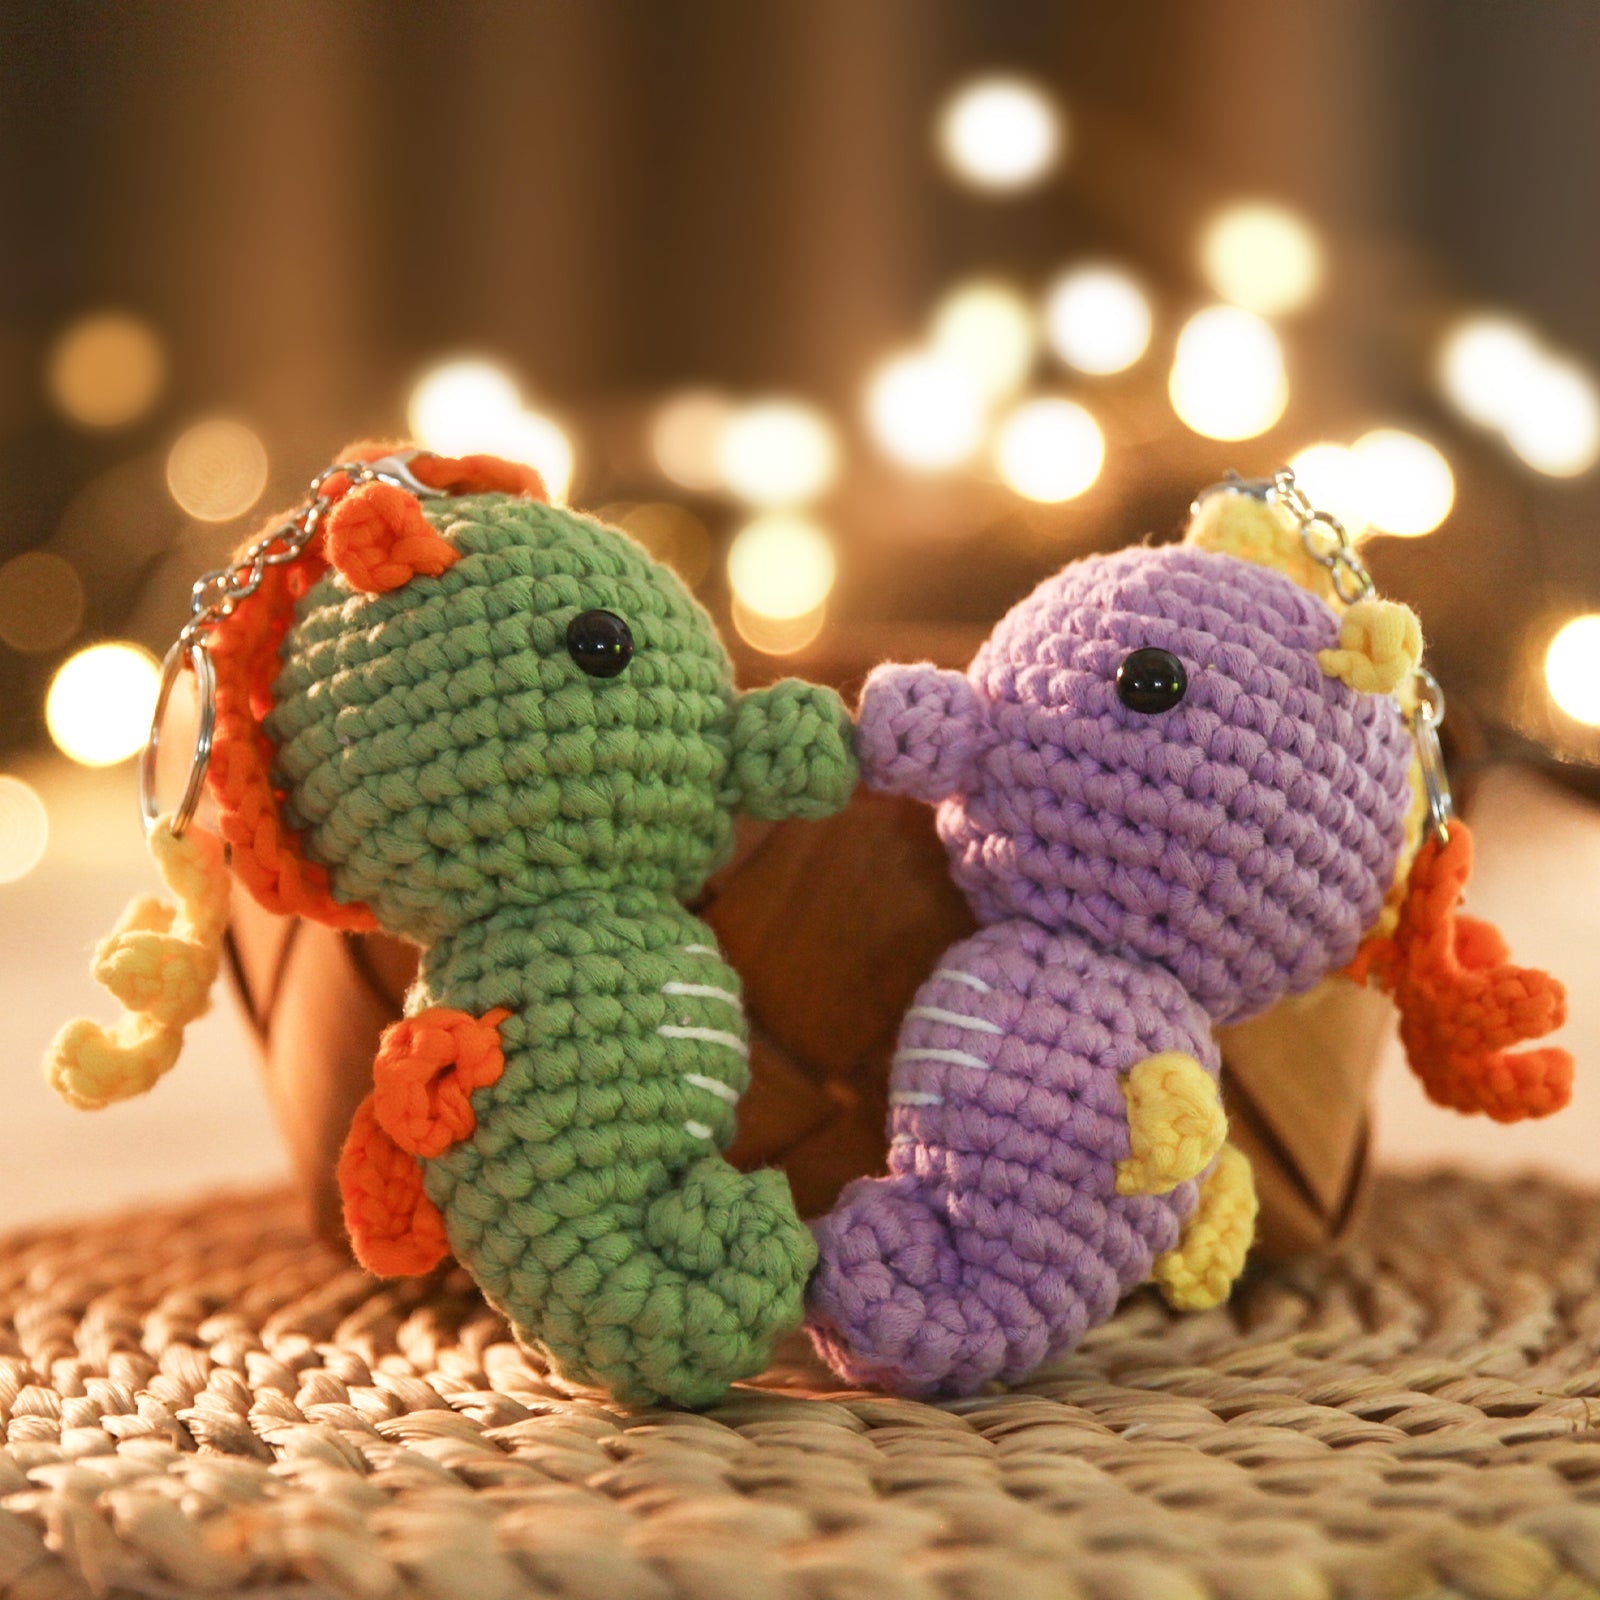 Mewaii® Pink Crochet Axolotl Barbie Crochet Kit for Beginners with Easy  Peasy Yarn